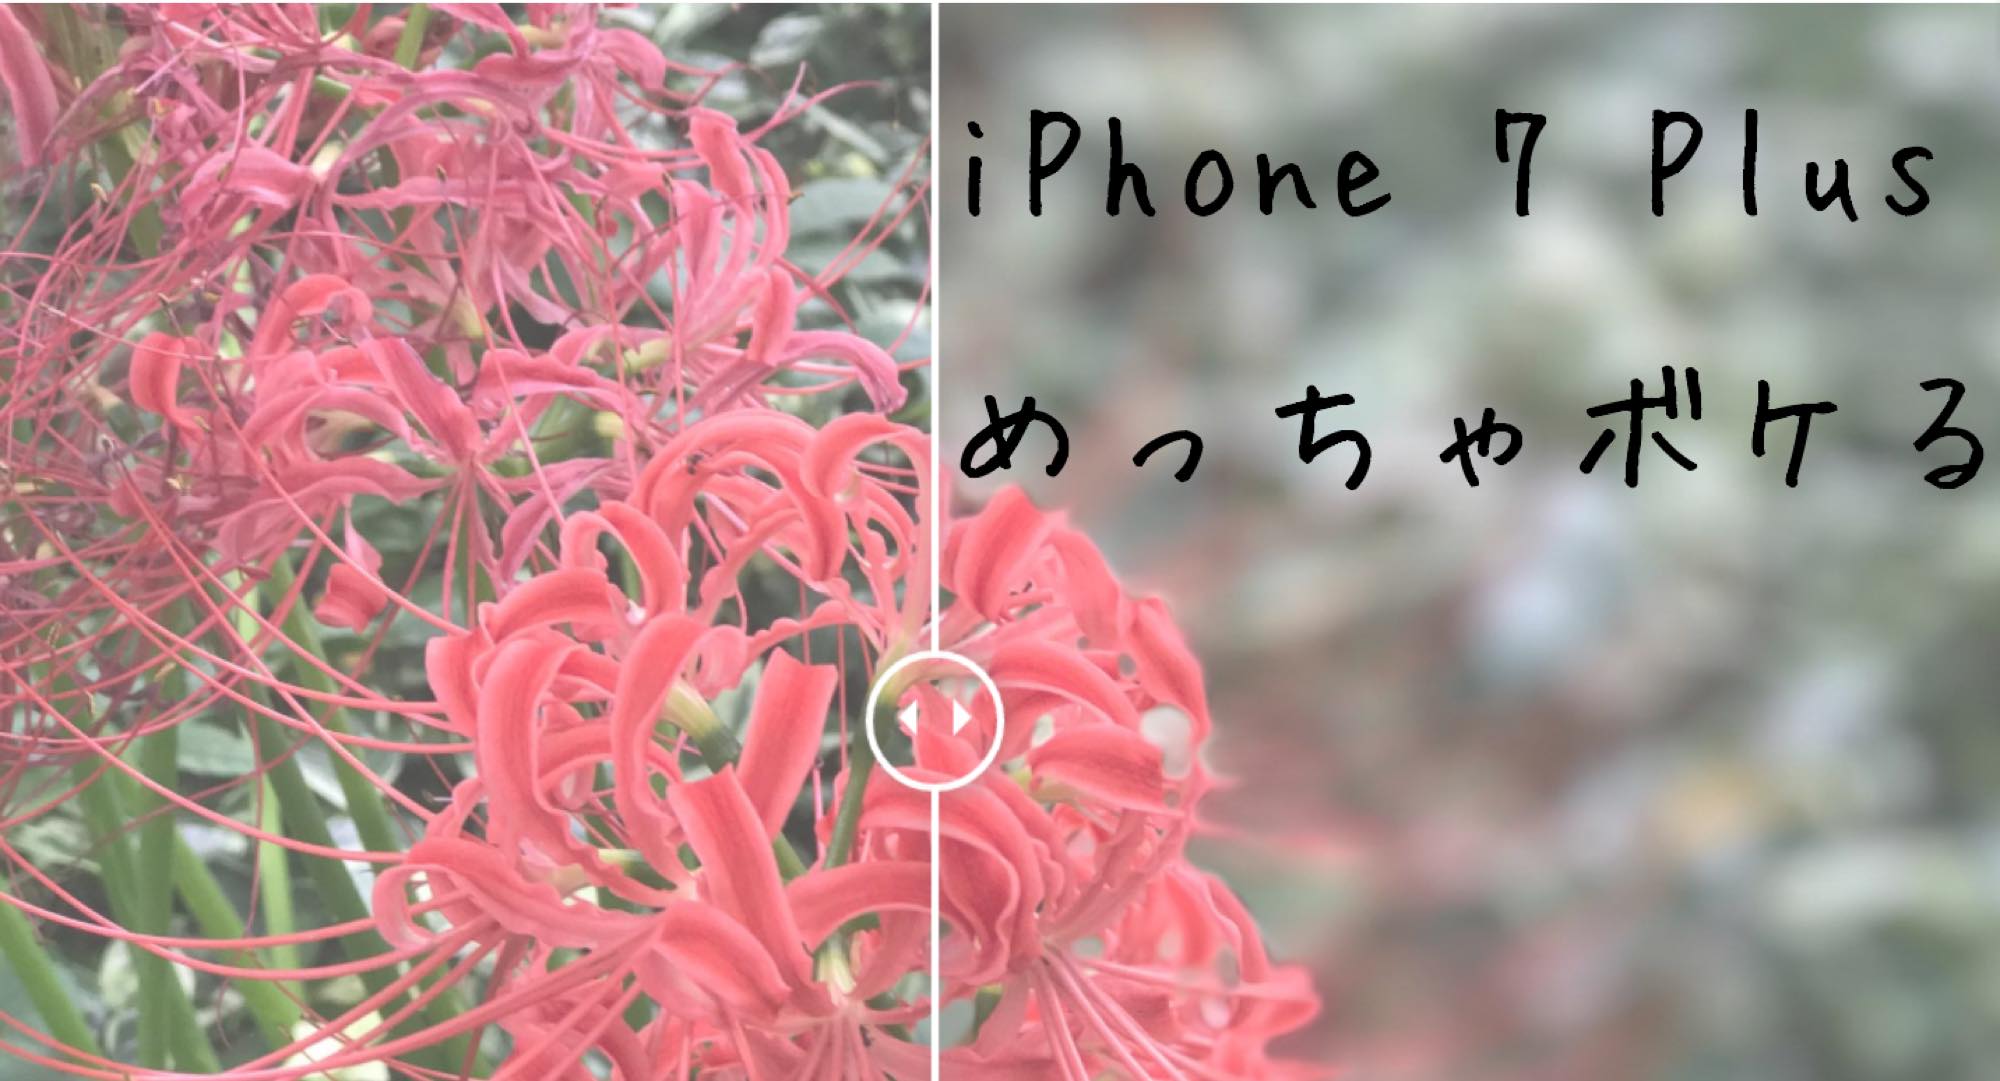 iphone7plus-depth-of-field23